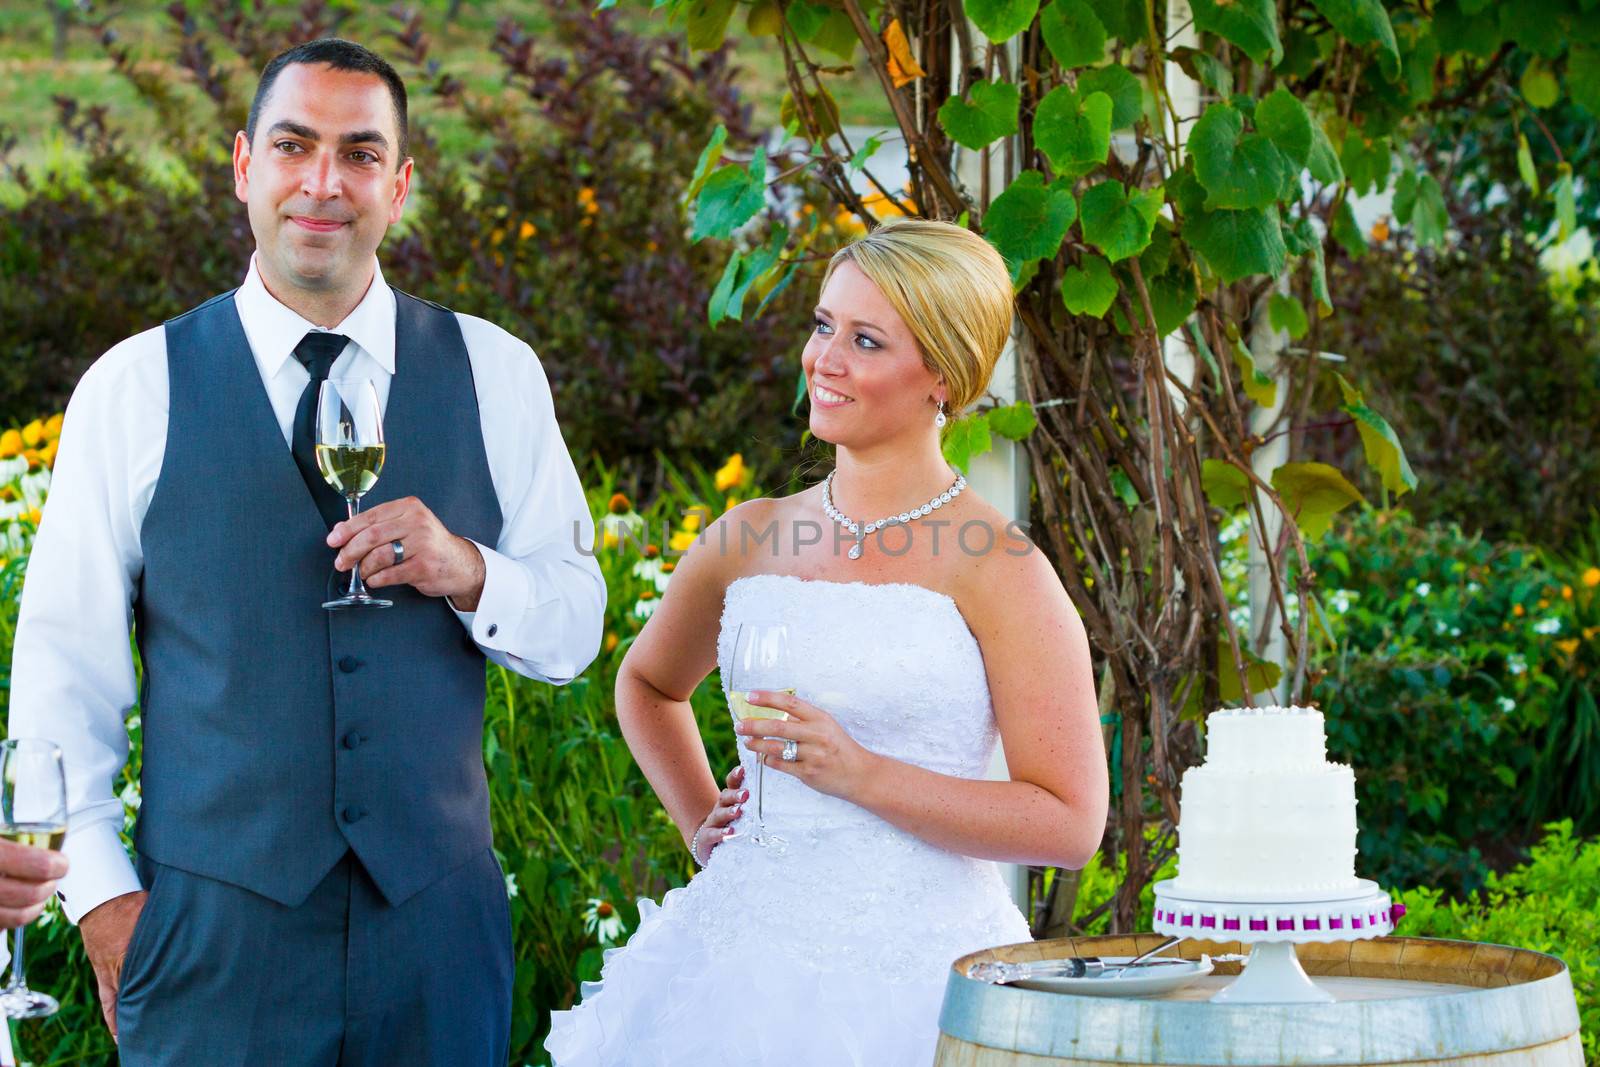 Bride and Groom Wedding Toasts by joshuaraineyphotography